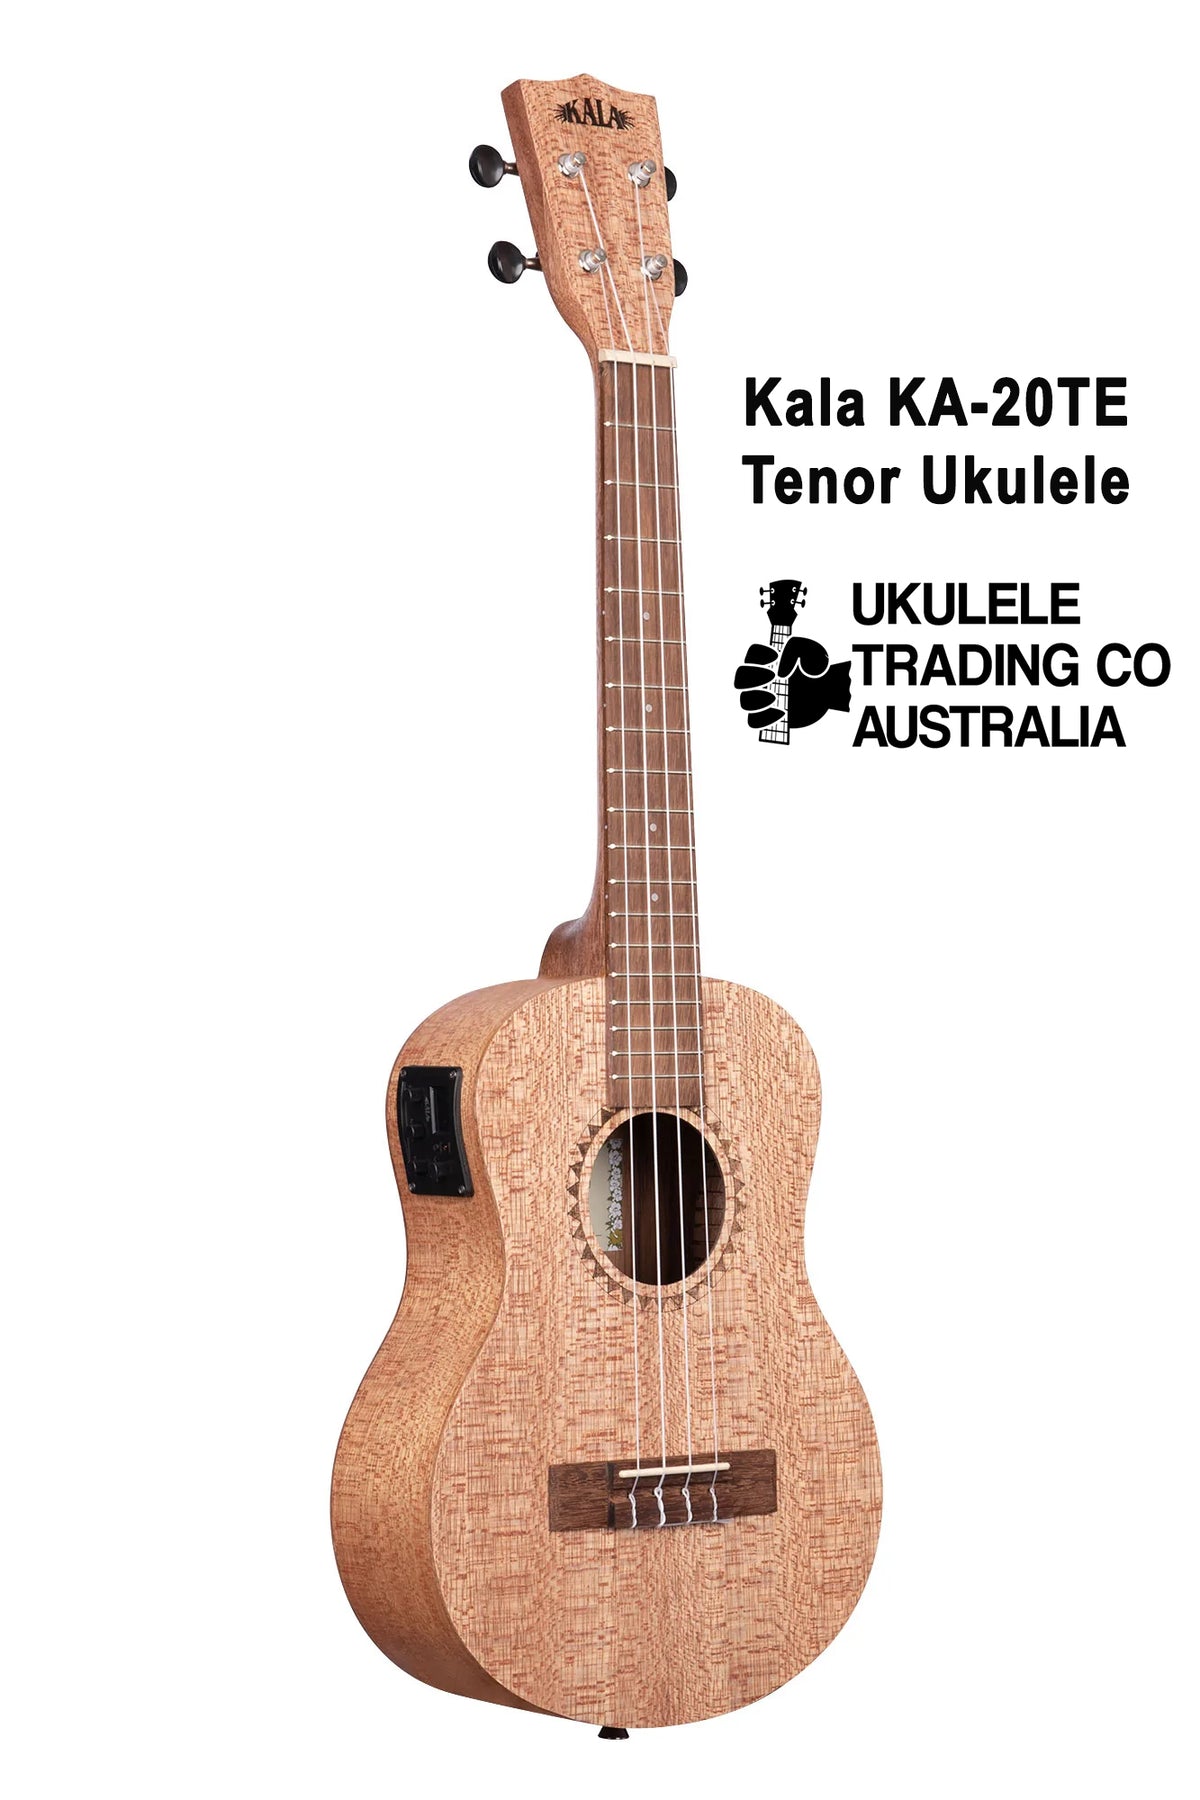 KA-20TE Kala 20 Series Tenor Electric with Pickup and EQ Ukulele Trading Co Australia